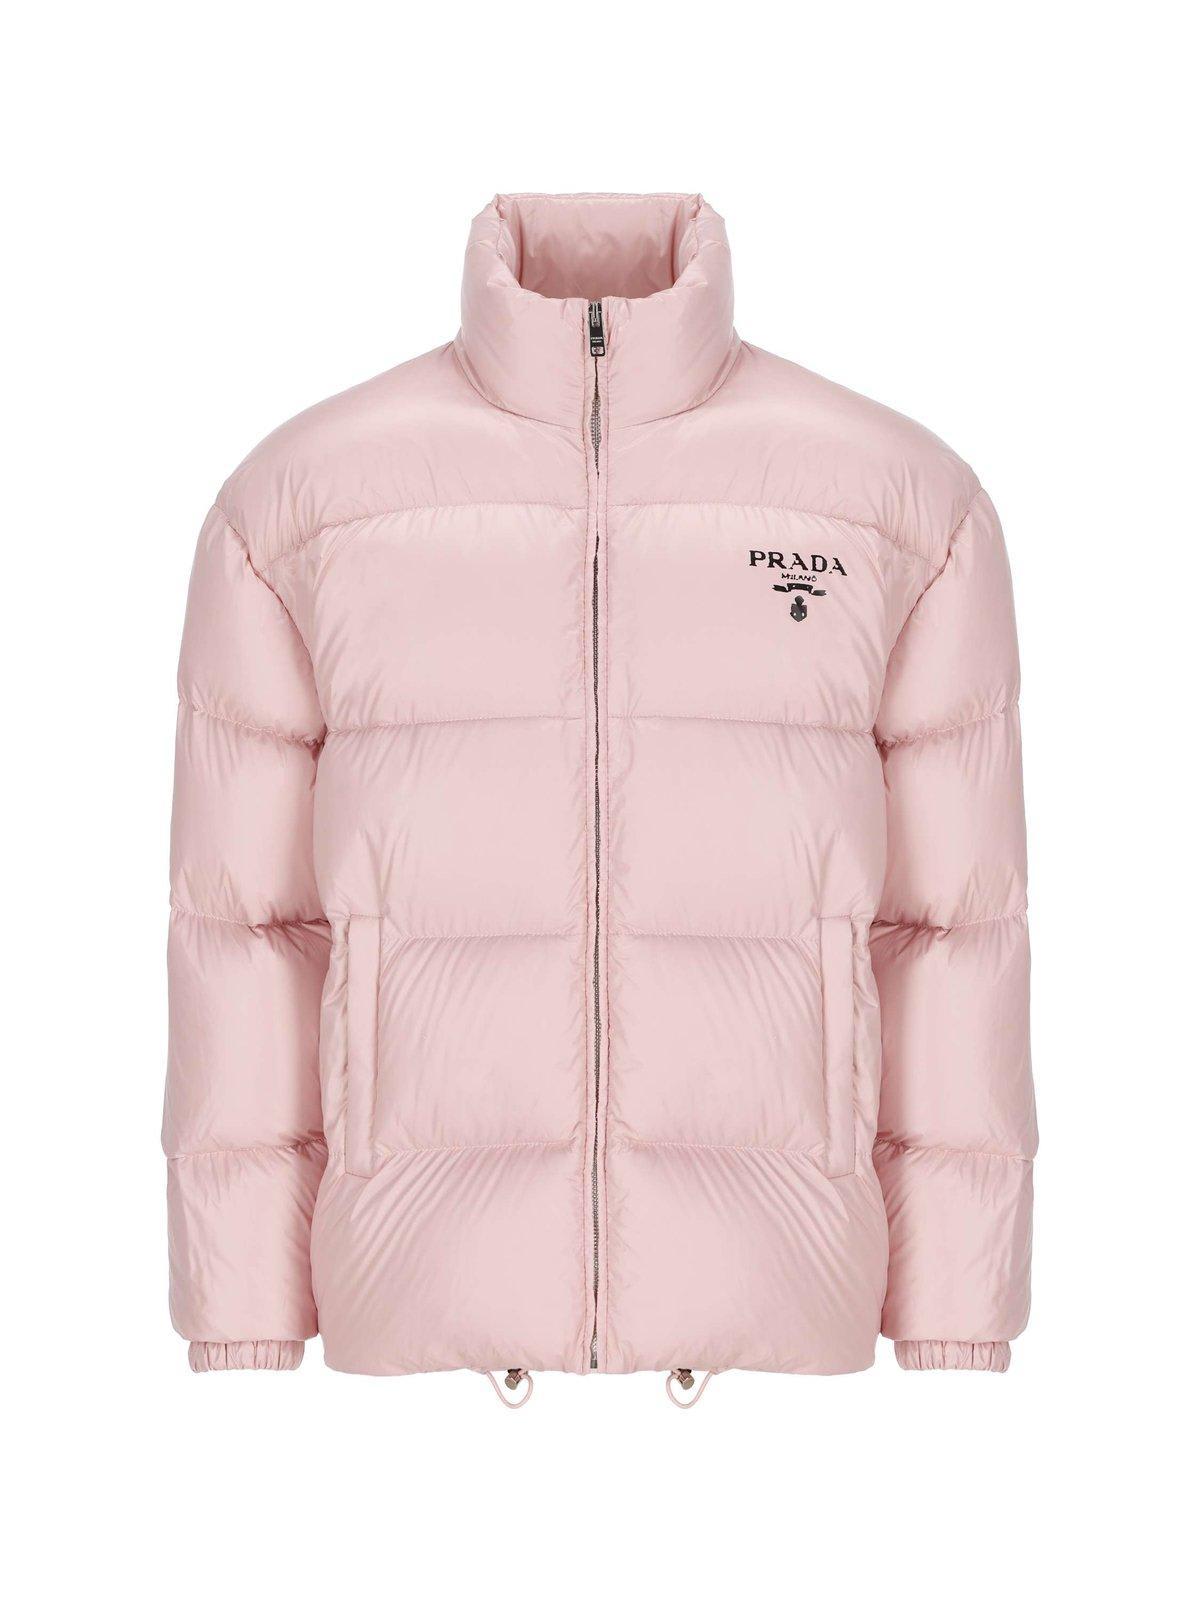 Prada Logo Printed Padded Jacket in Pink | Lyst